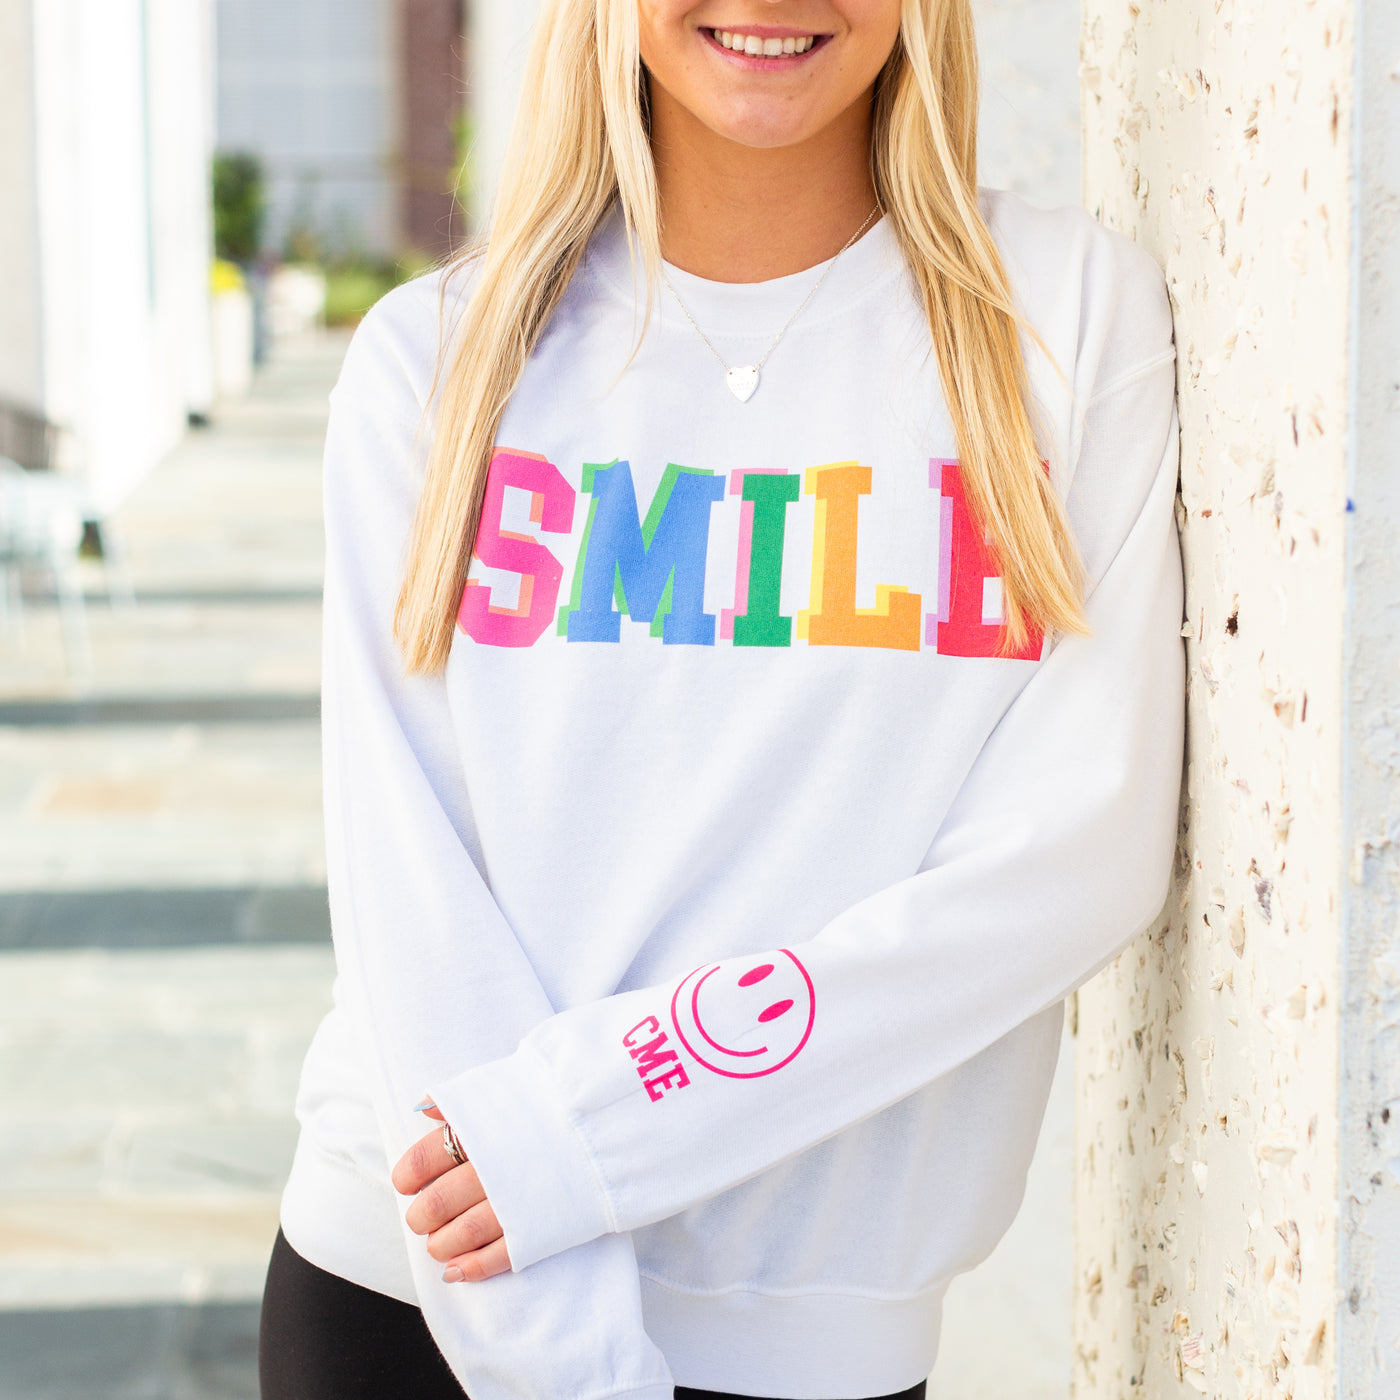 Initialed Colorful Block 'Smile' Crewneck Sweatshirt